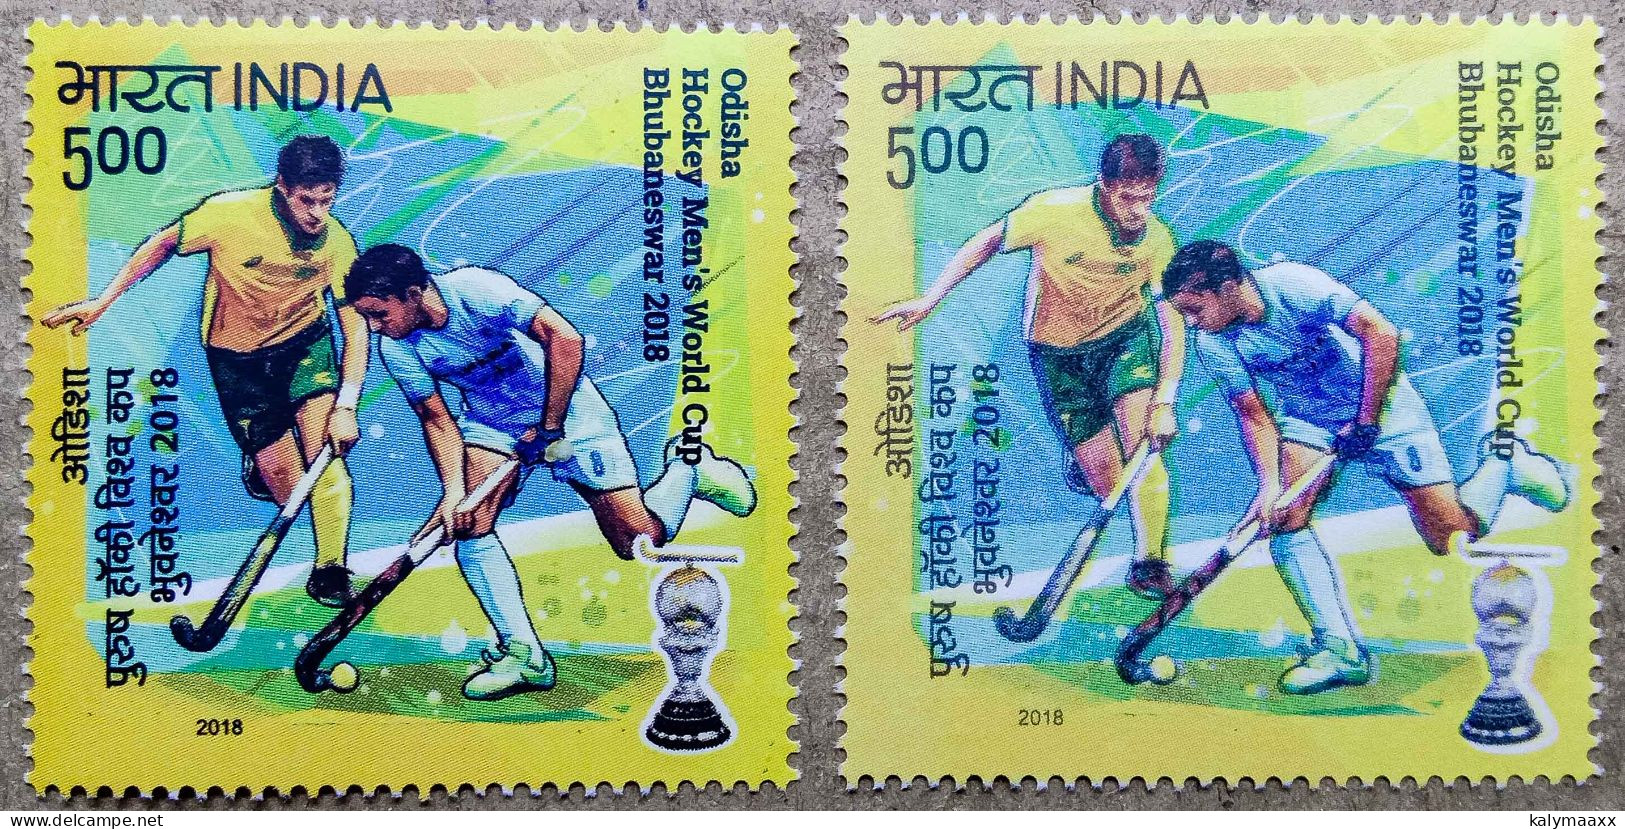 INDIA 2018 HOCKEY MEN'S WORLDCUP, DRY PRINT ERROR, DIFFERENT COLOUR SHADE ERROR....MNH - Rasenhockey